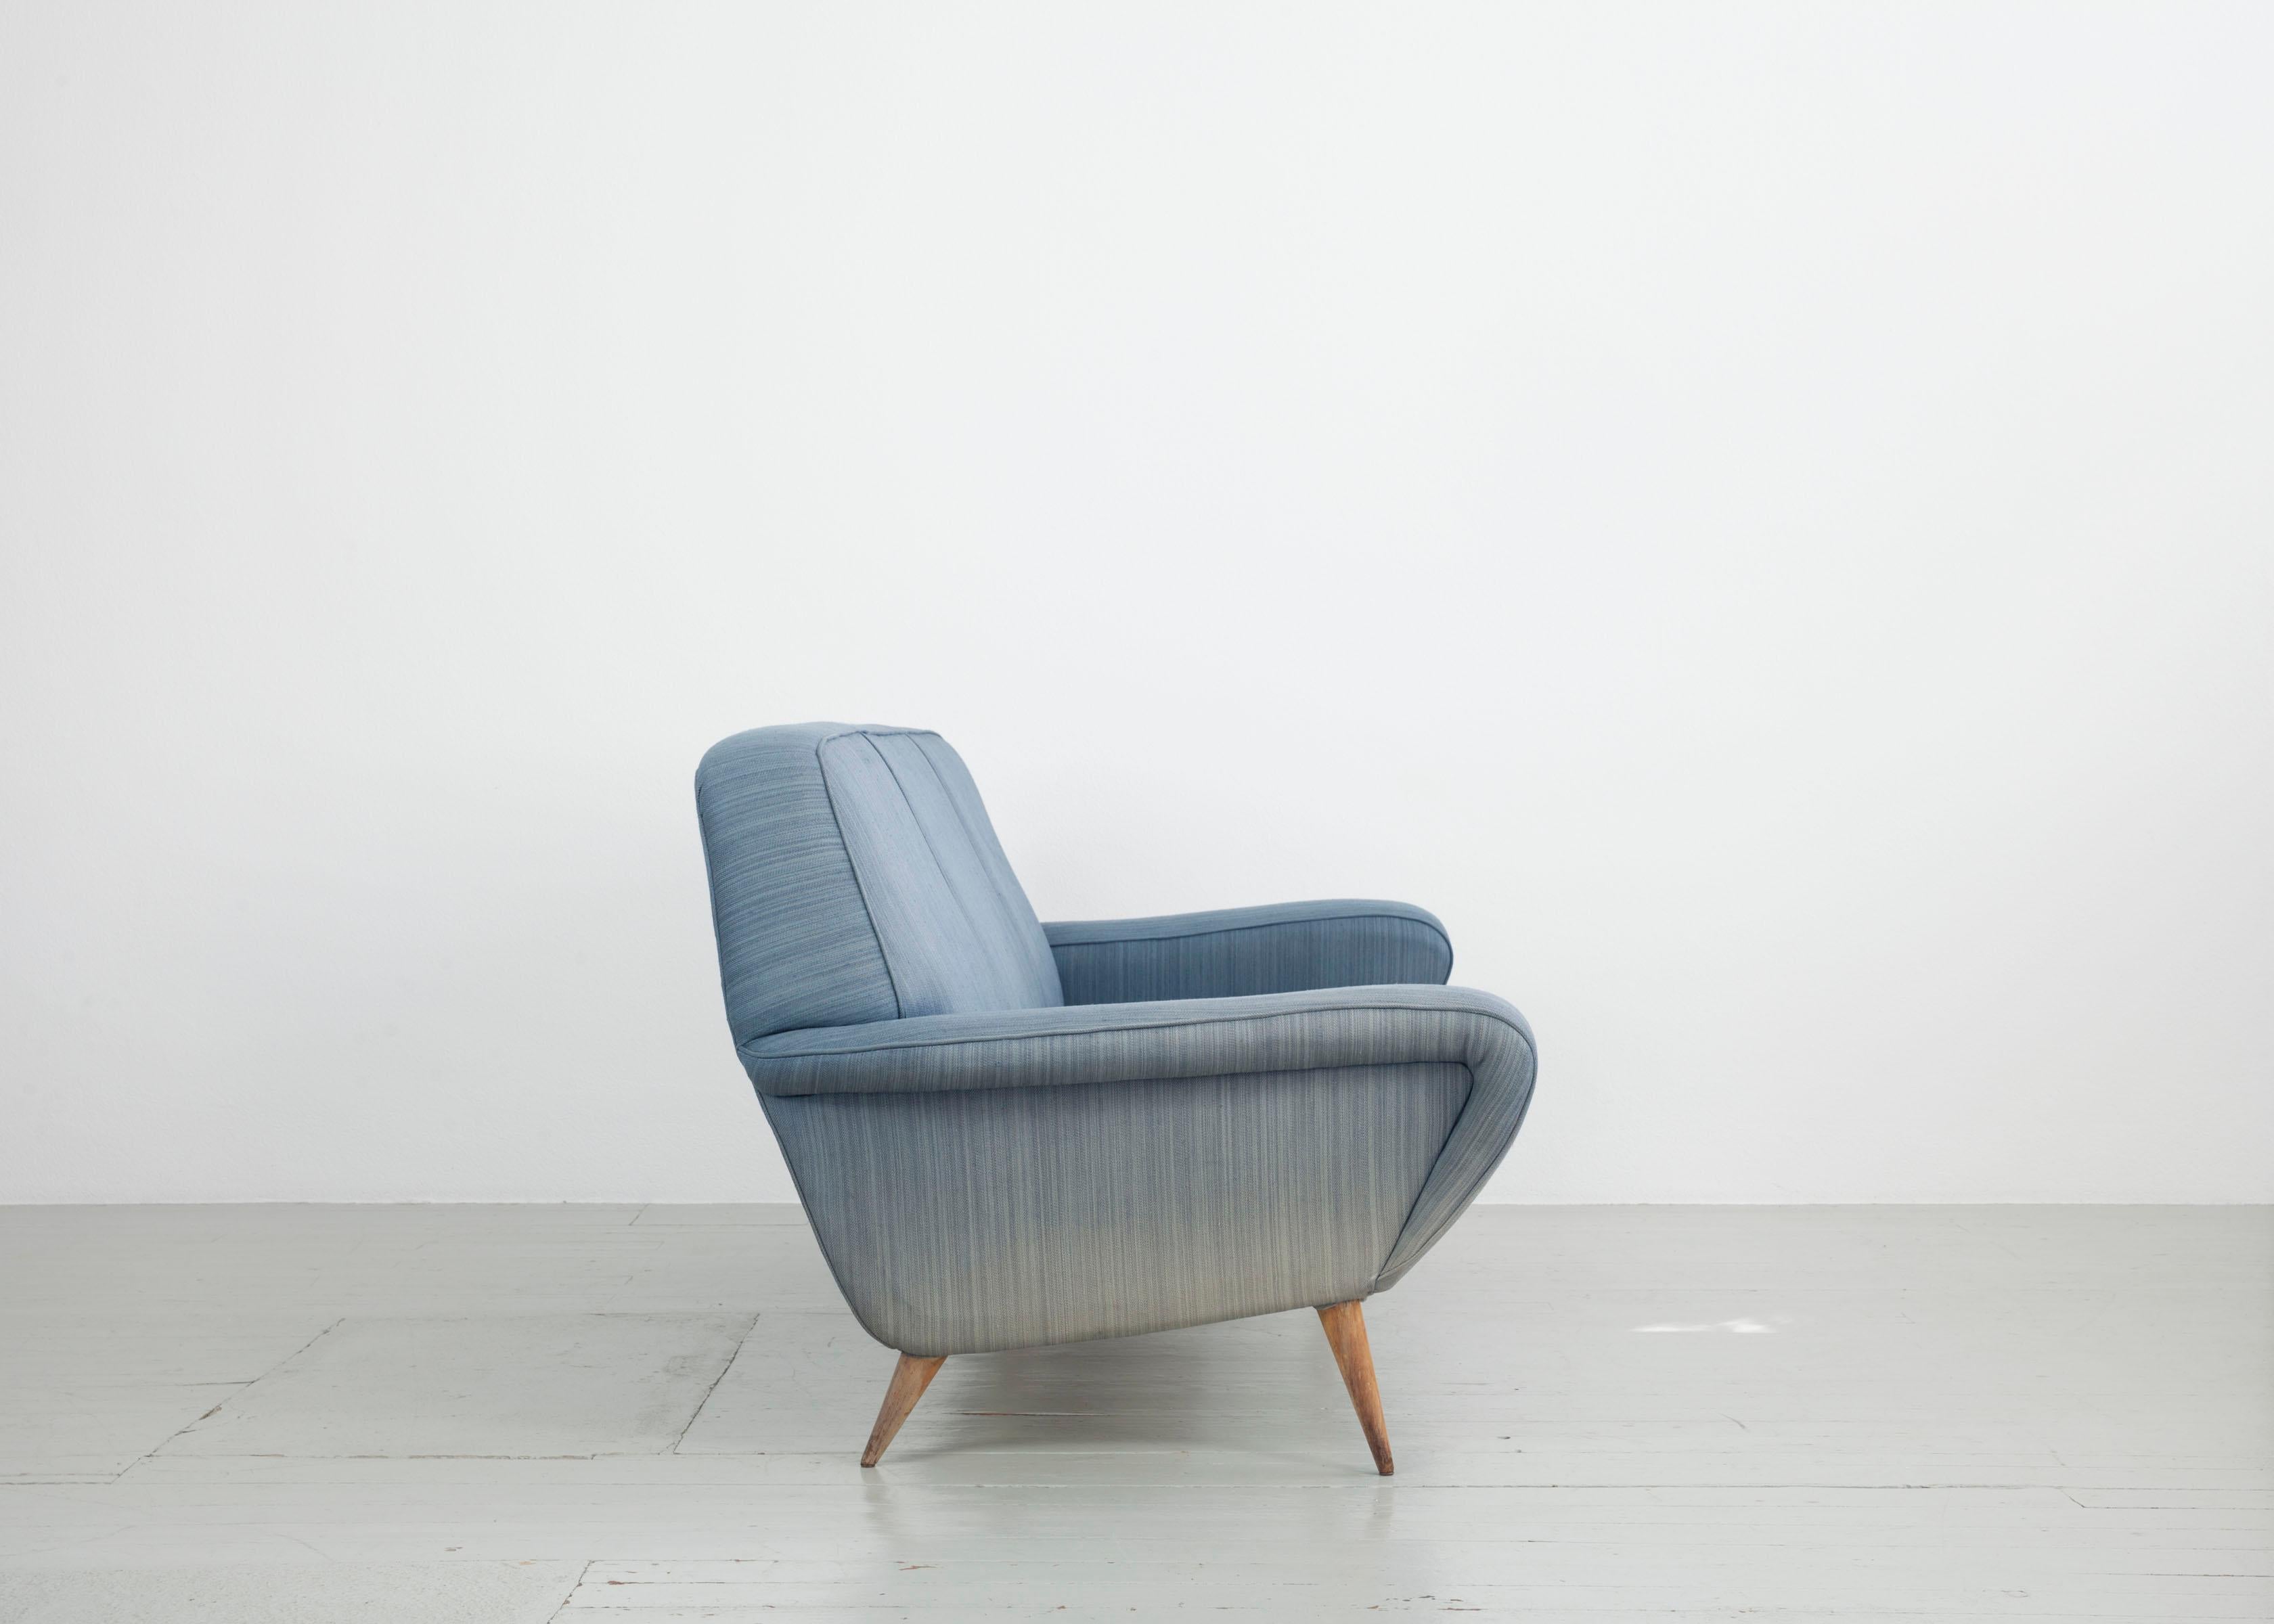 3-Sitz-Sofa Modell „830“ im Design Gianfranco Frattini, Cassina, 1950er Jahre (Mitte des 20. Jahrhunderts) im Angebot